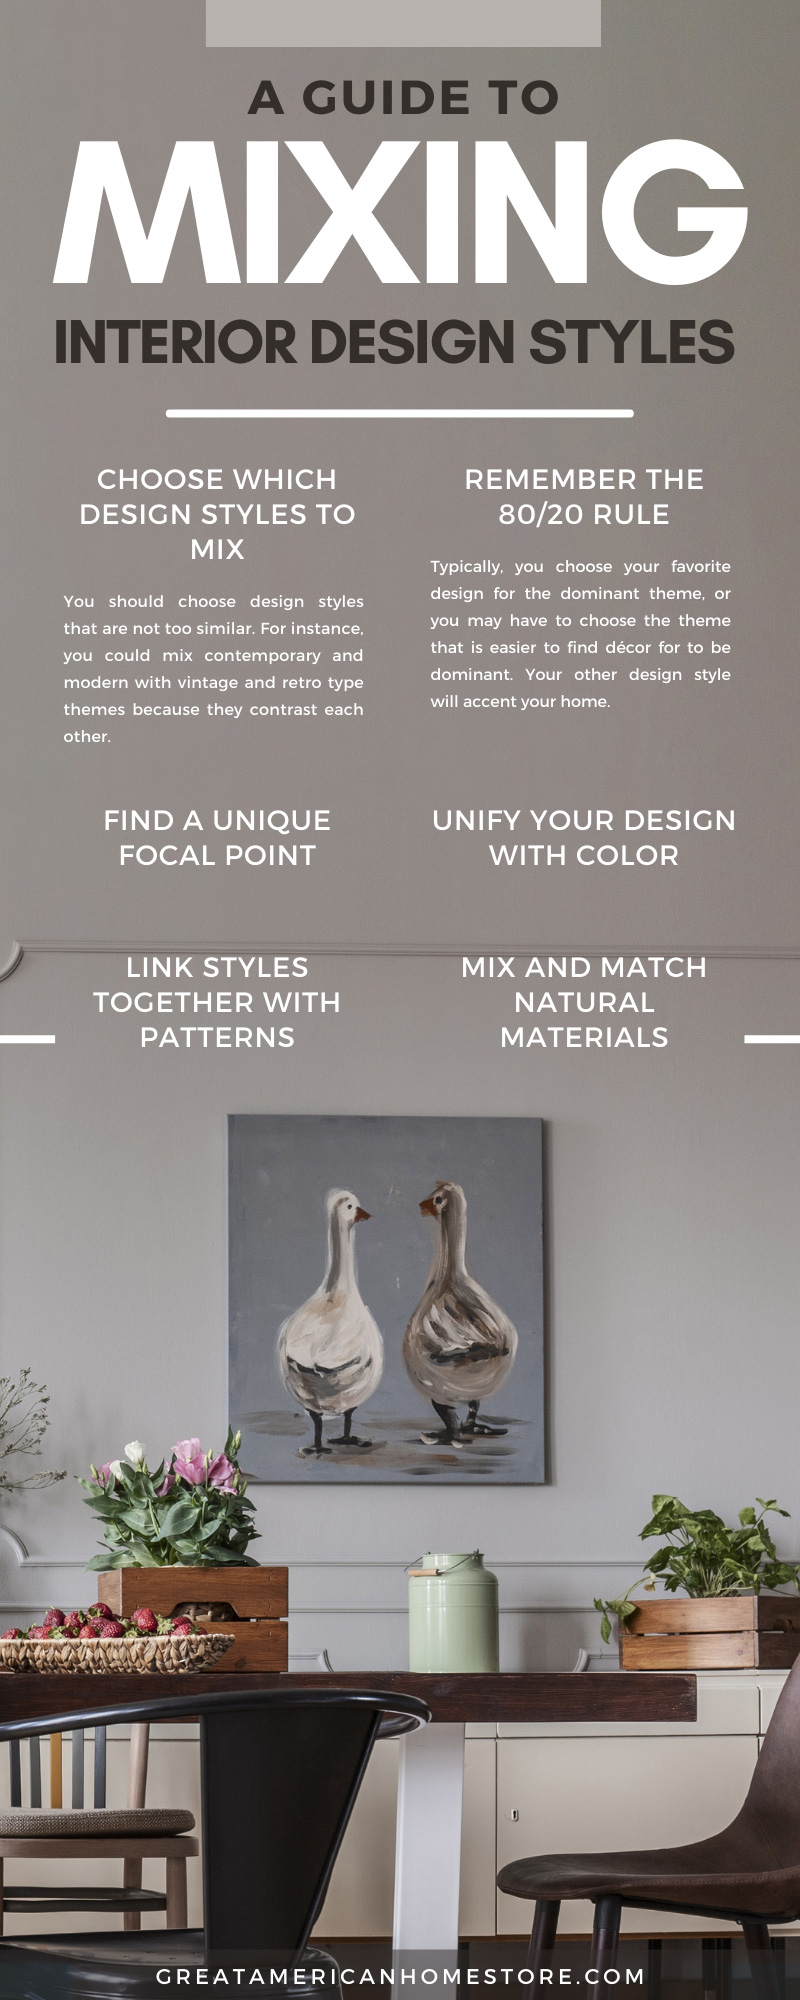 Mixing Interior Design Styles Infographic